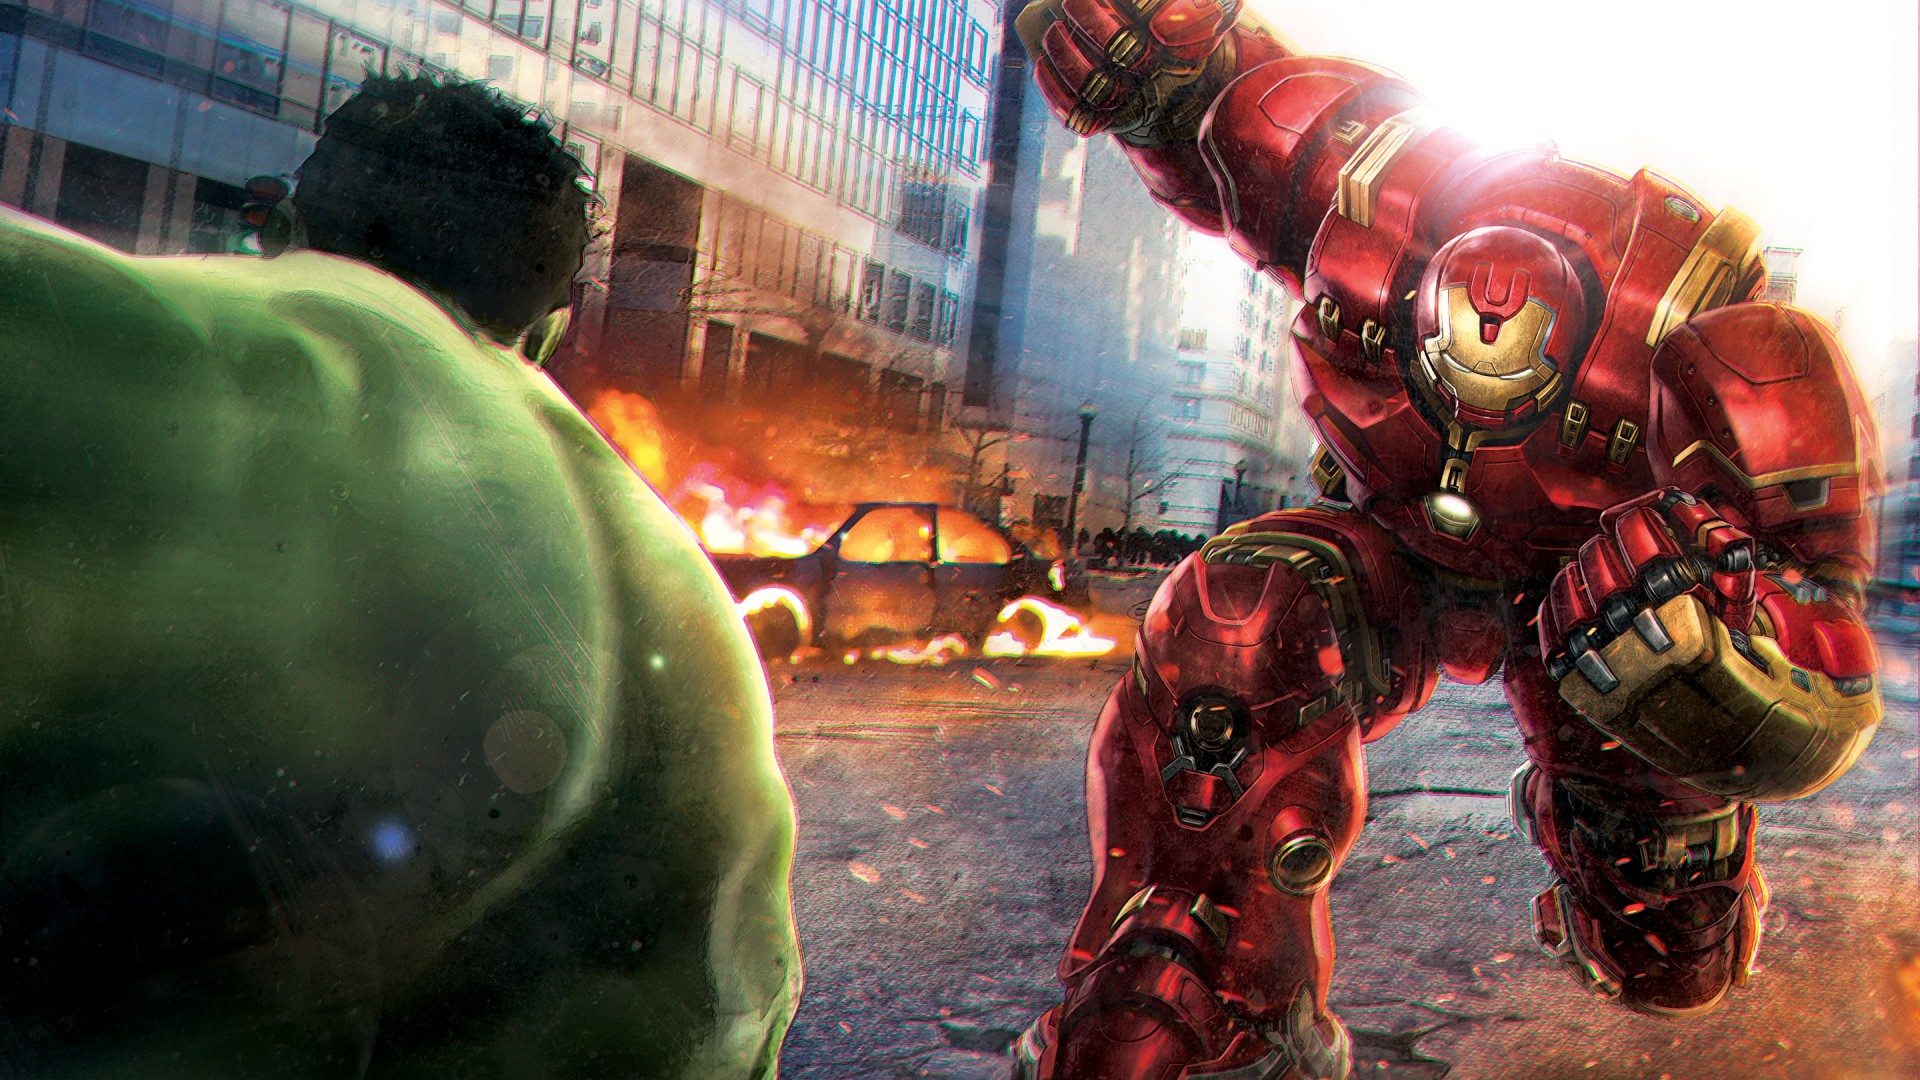 Hulk vs Hulkbuster Hd Wallpaper for Desktop and Mobiles iPhone 7 Plus /  iPhone 8 Plus - HD Wallpaper 